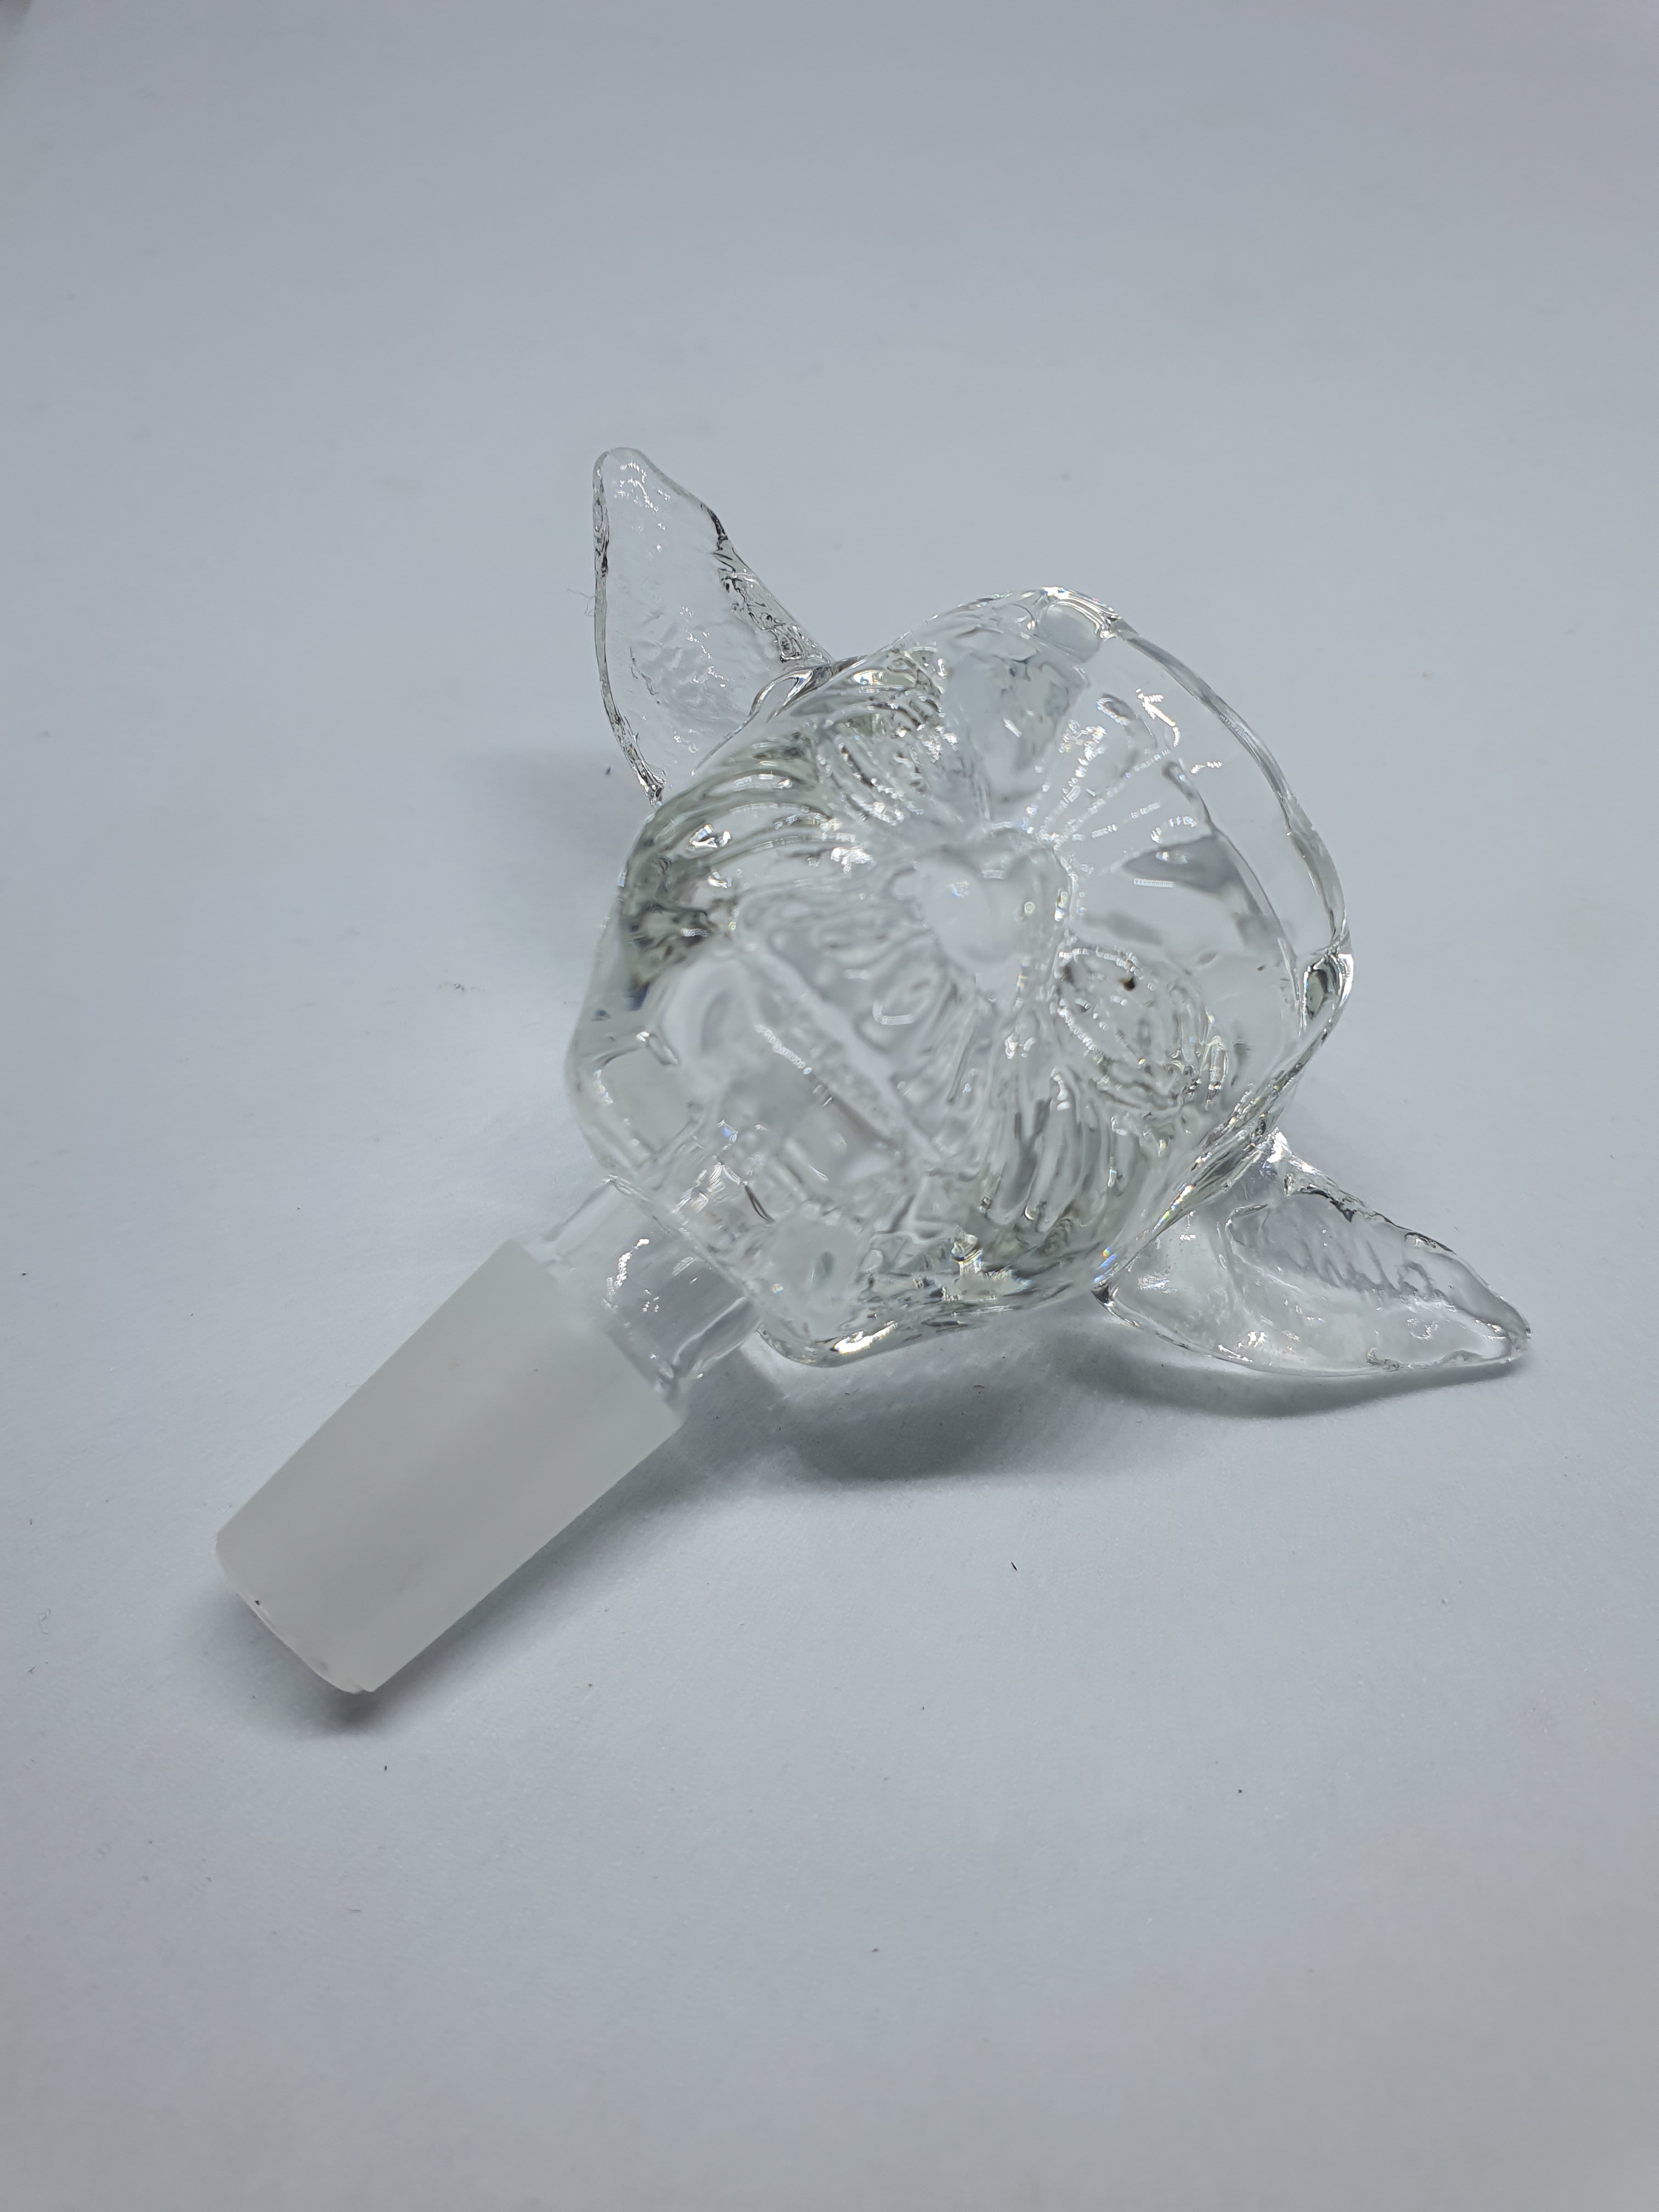 Yoda Cone Piece 14mm male (clear) - Juicy Puff  Craft E Liquid E Juice,  Vaporizers, Vapes, E Cigarettes